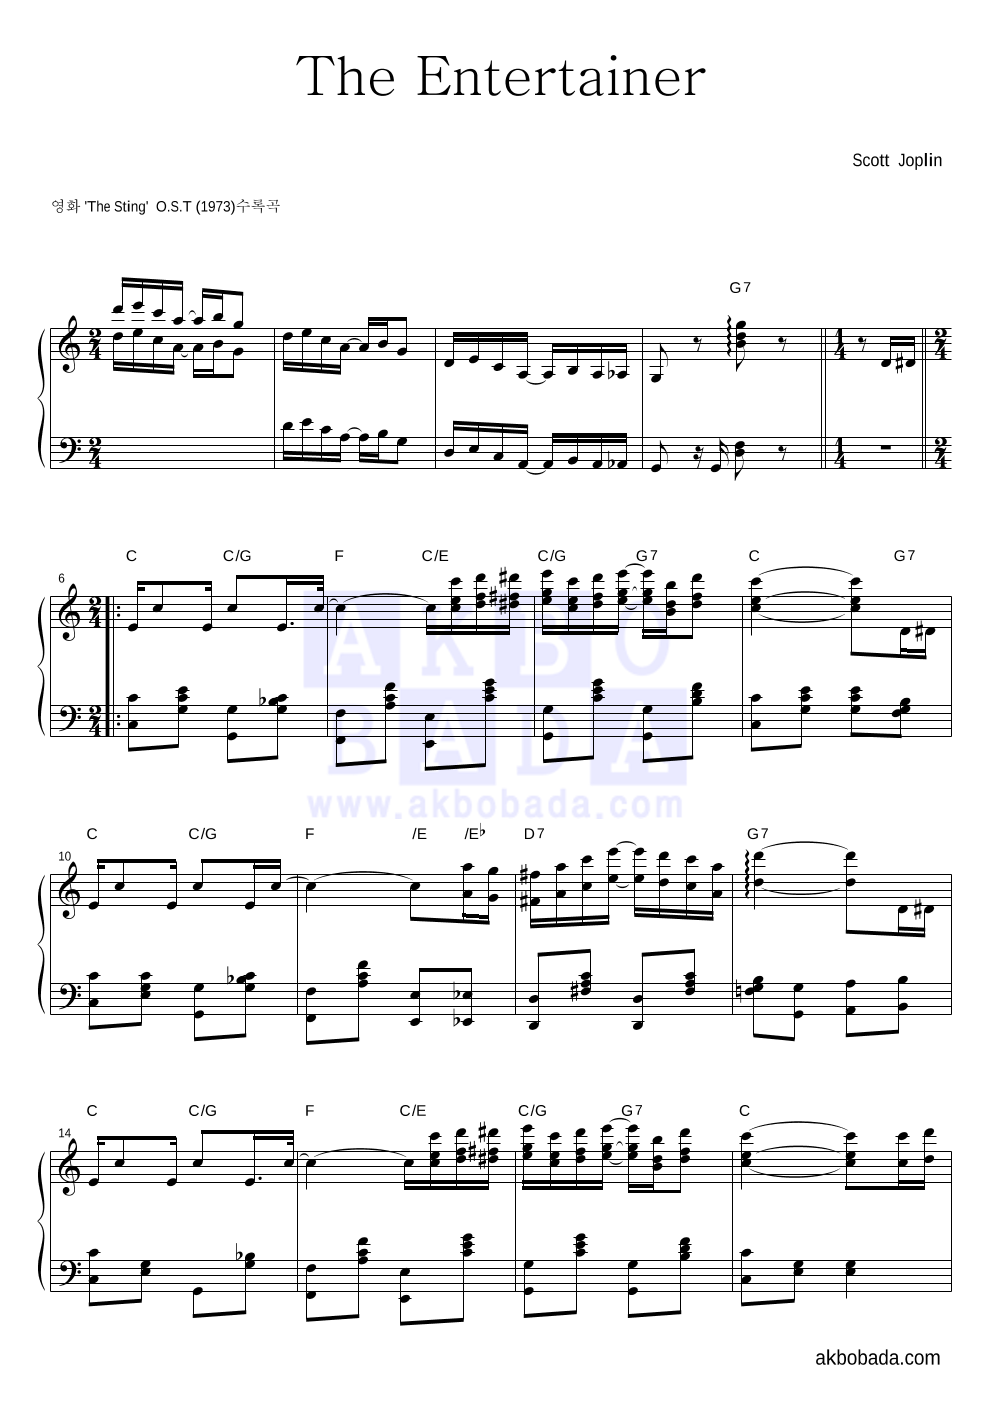 Scott Joplin - The Entertainer 피아노 2단 악보 